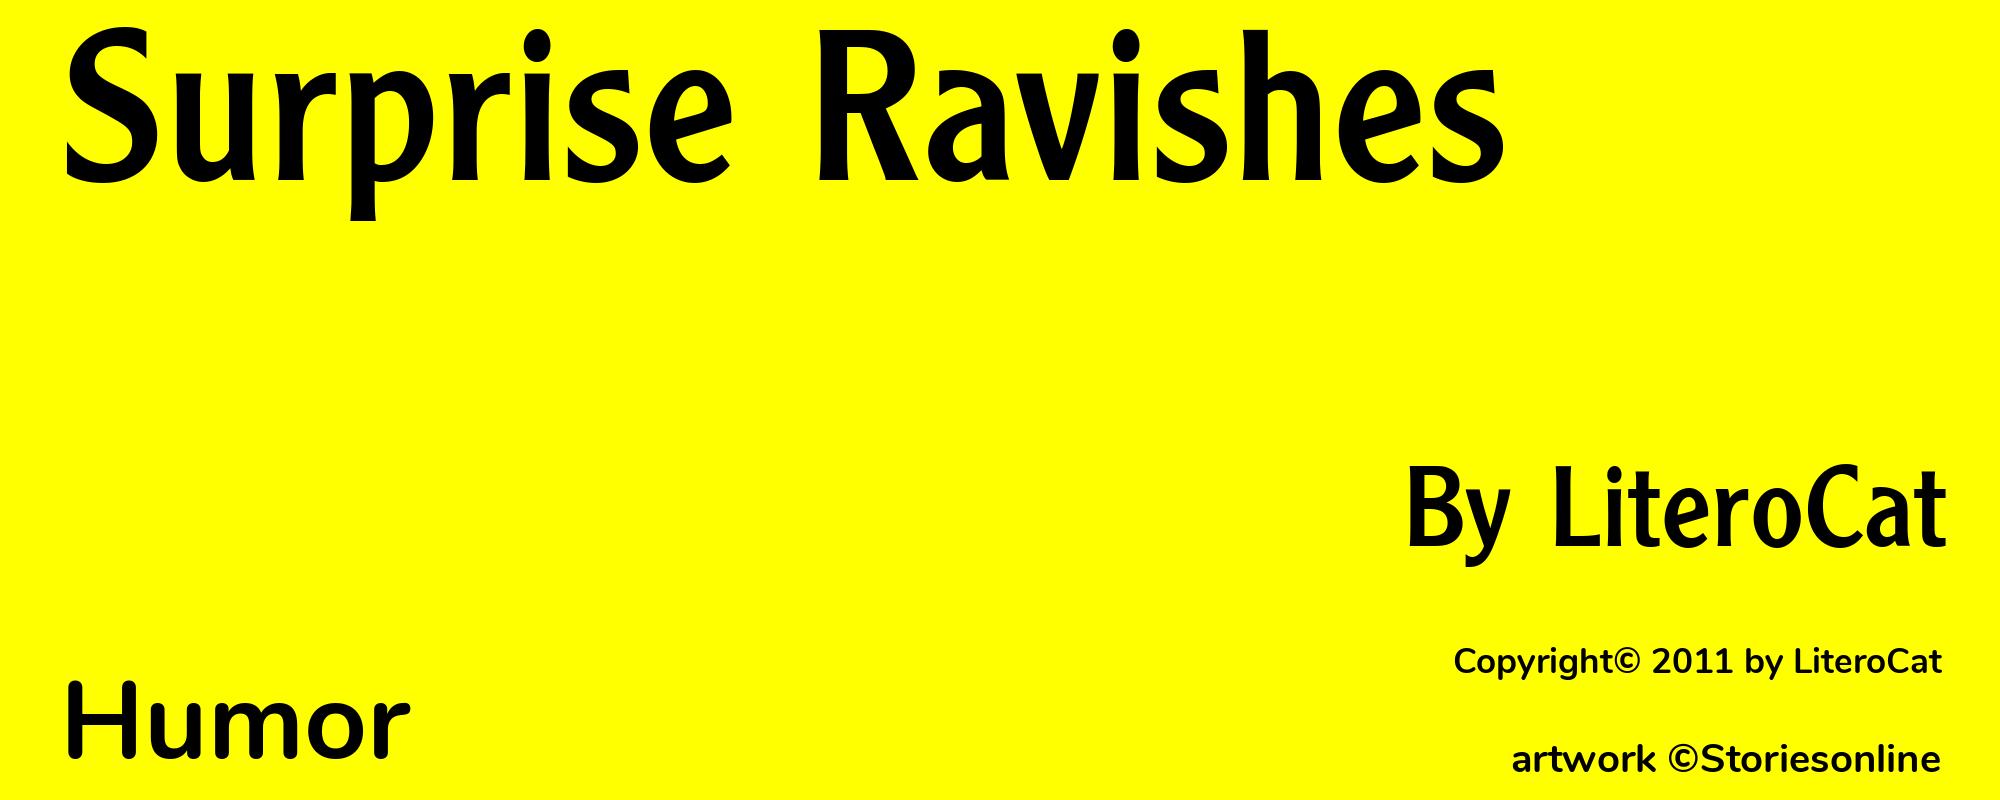 Surprise Ravishes - Cover